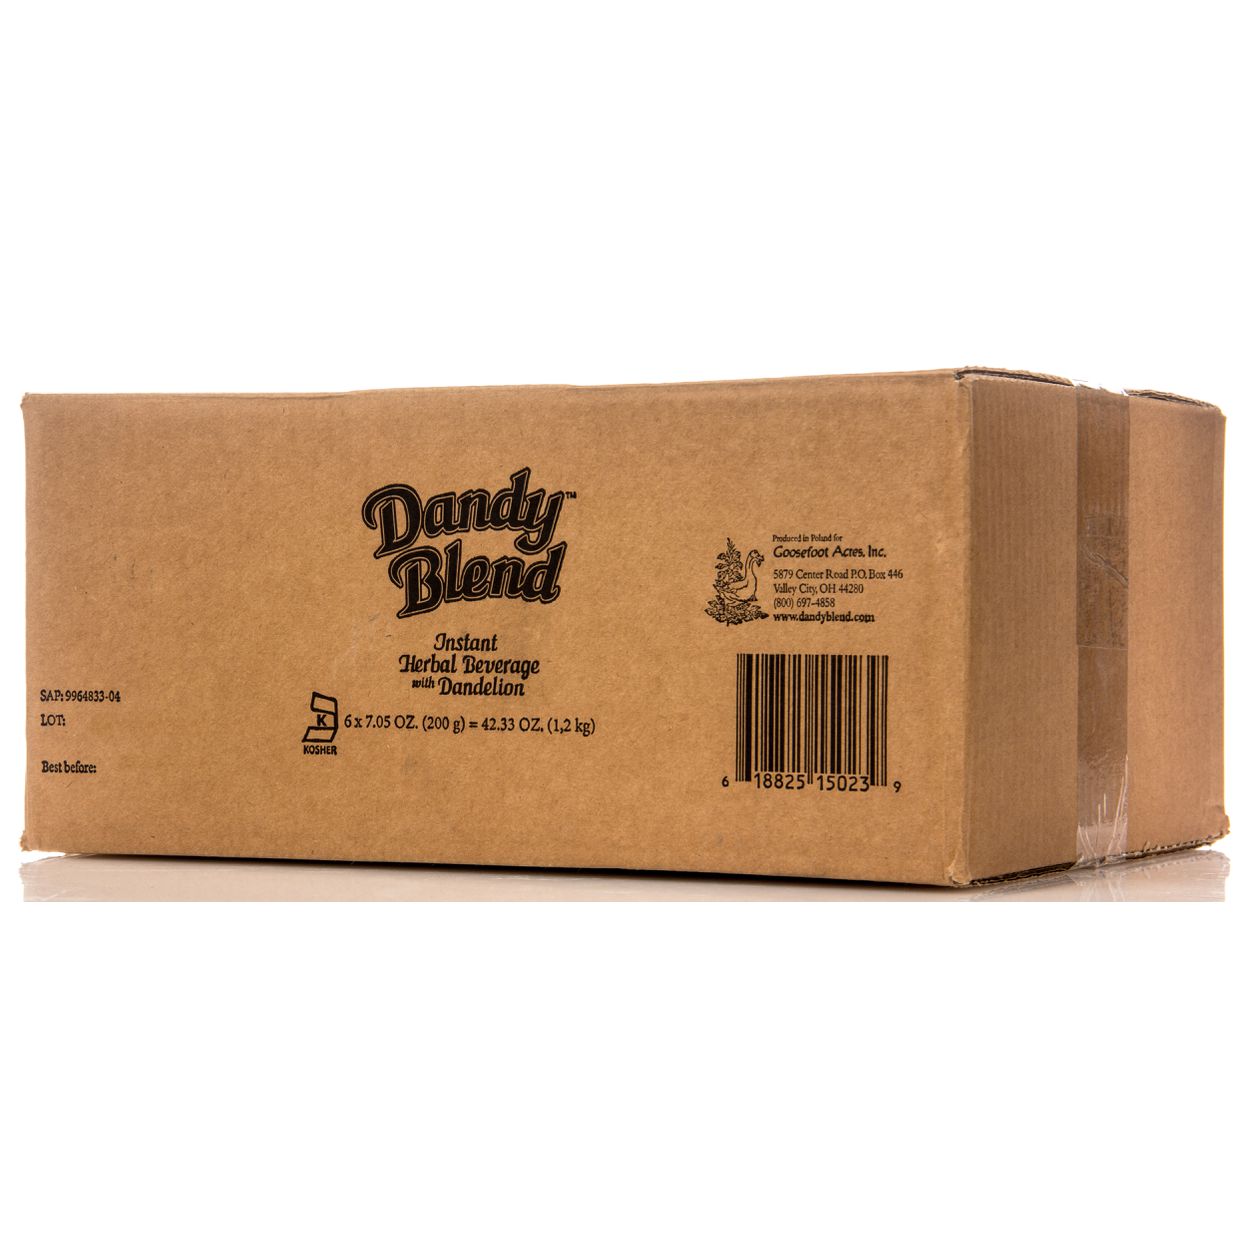 Dandy Blend Instant Herbal Beverage with Dandelion - Organic (Pack of